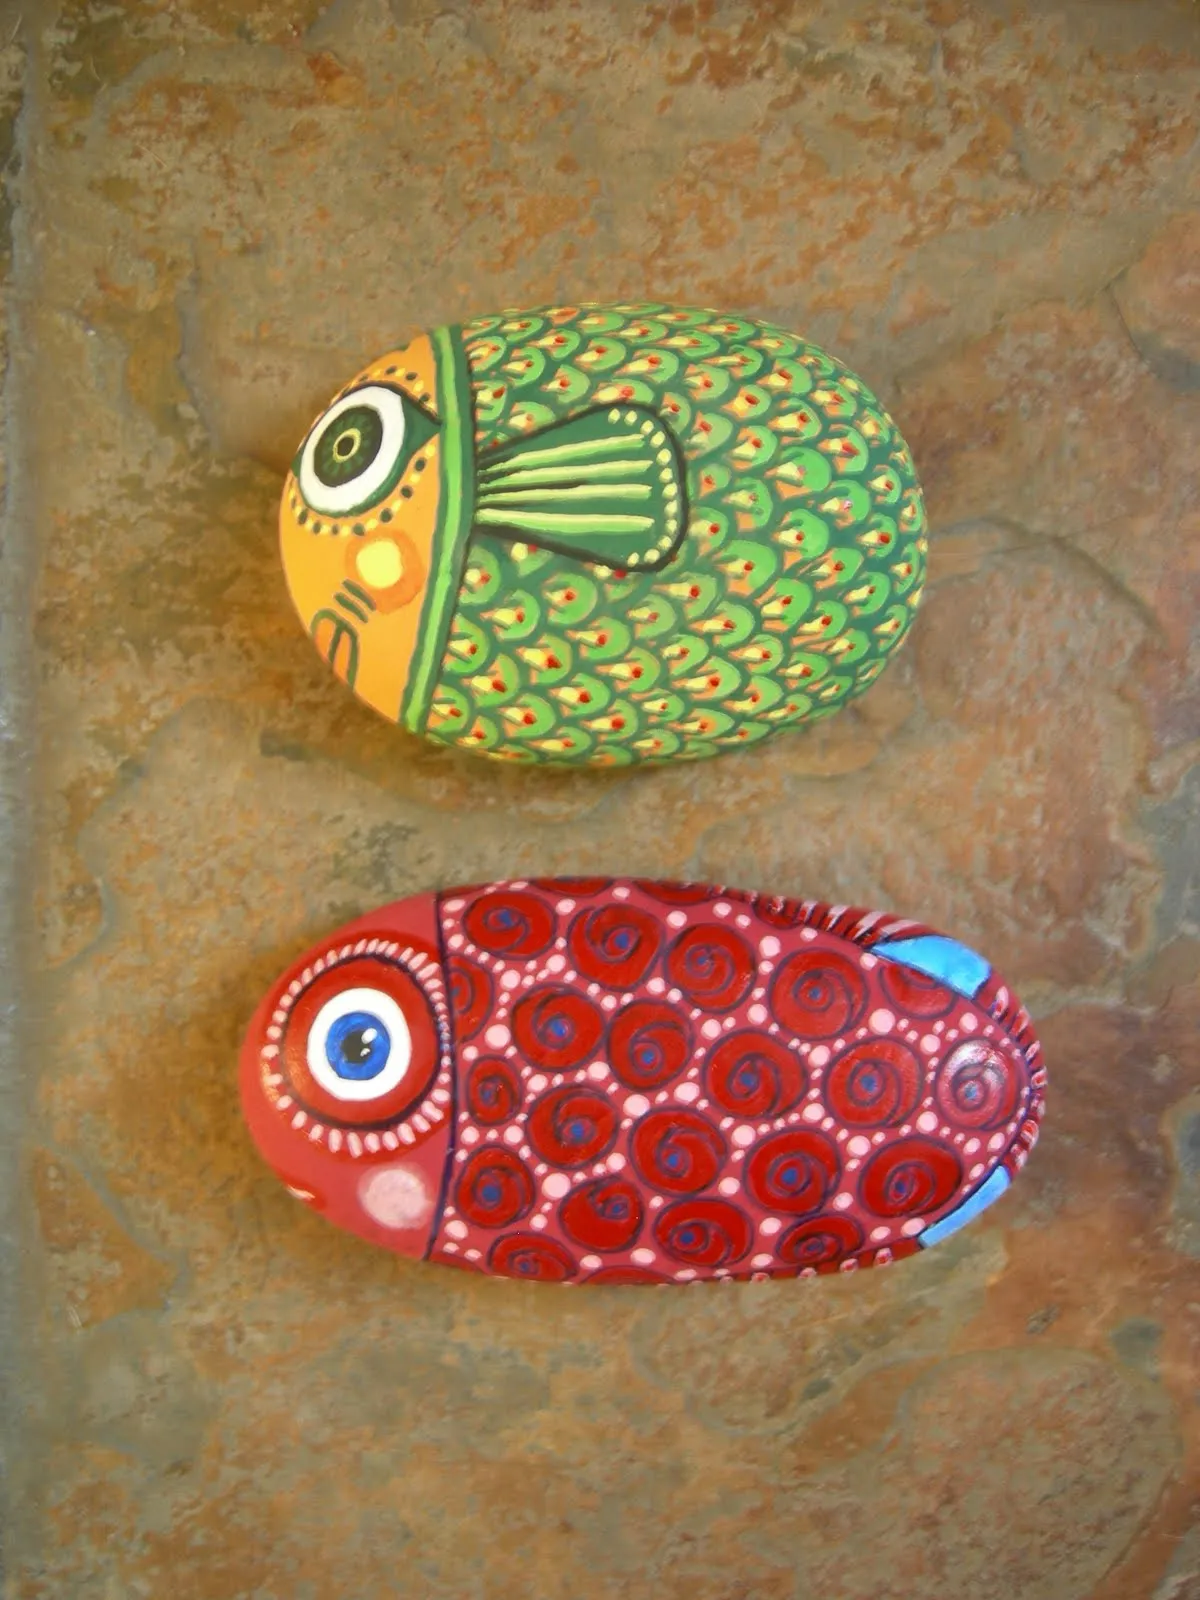 Kedibu Murales y Objetos Decorativos: Piedras pintadas:búho, seta ...